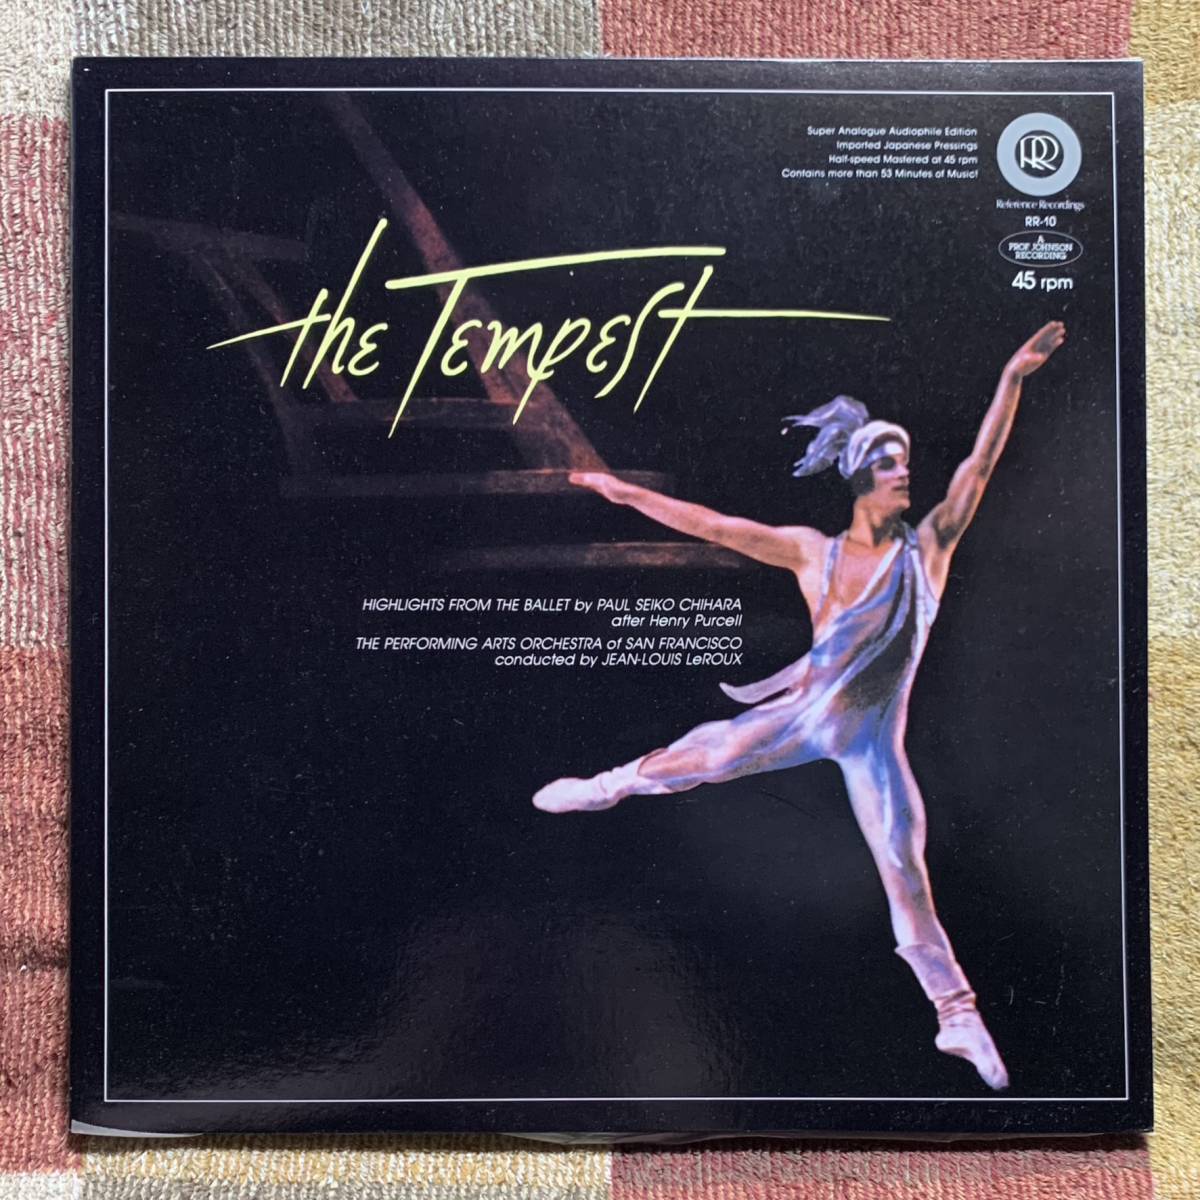 45 вращение LP* рис Reference Recordings RR-10* paul (pole) *chi - la балет музыка [ Tempest ] Nagaoka металлический мужчина вне запись selection 